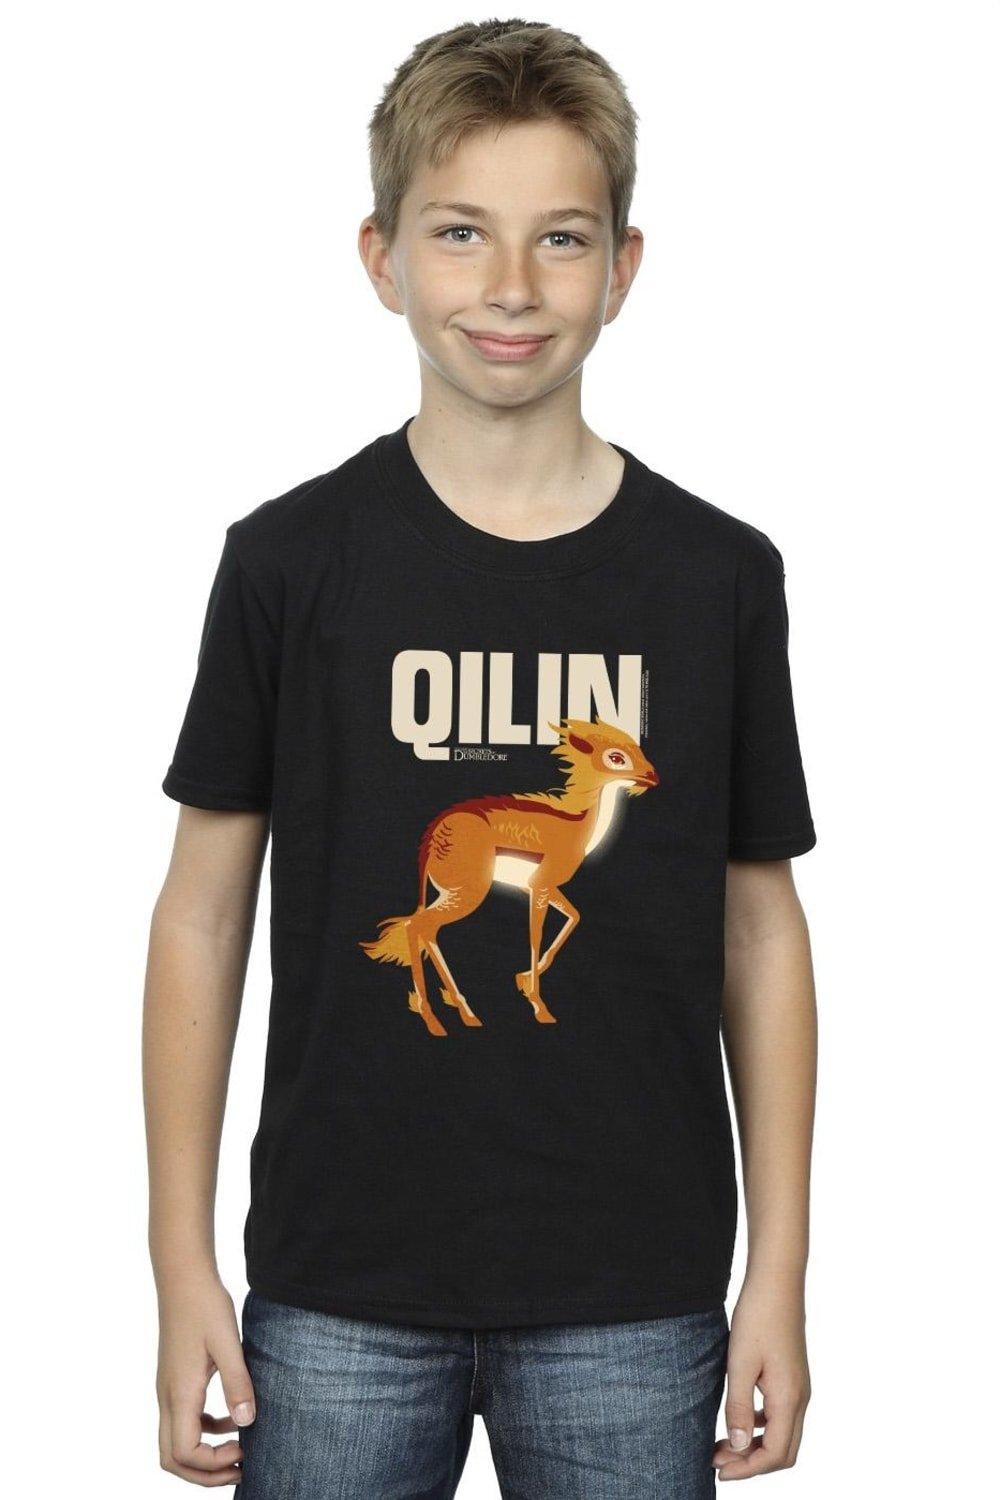 Qilin Character T-Shirt